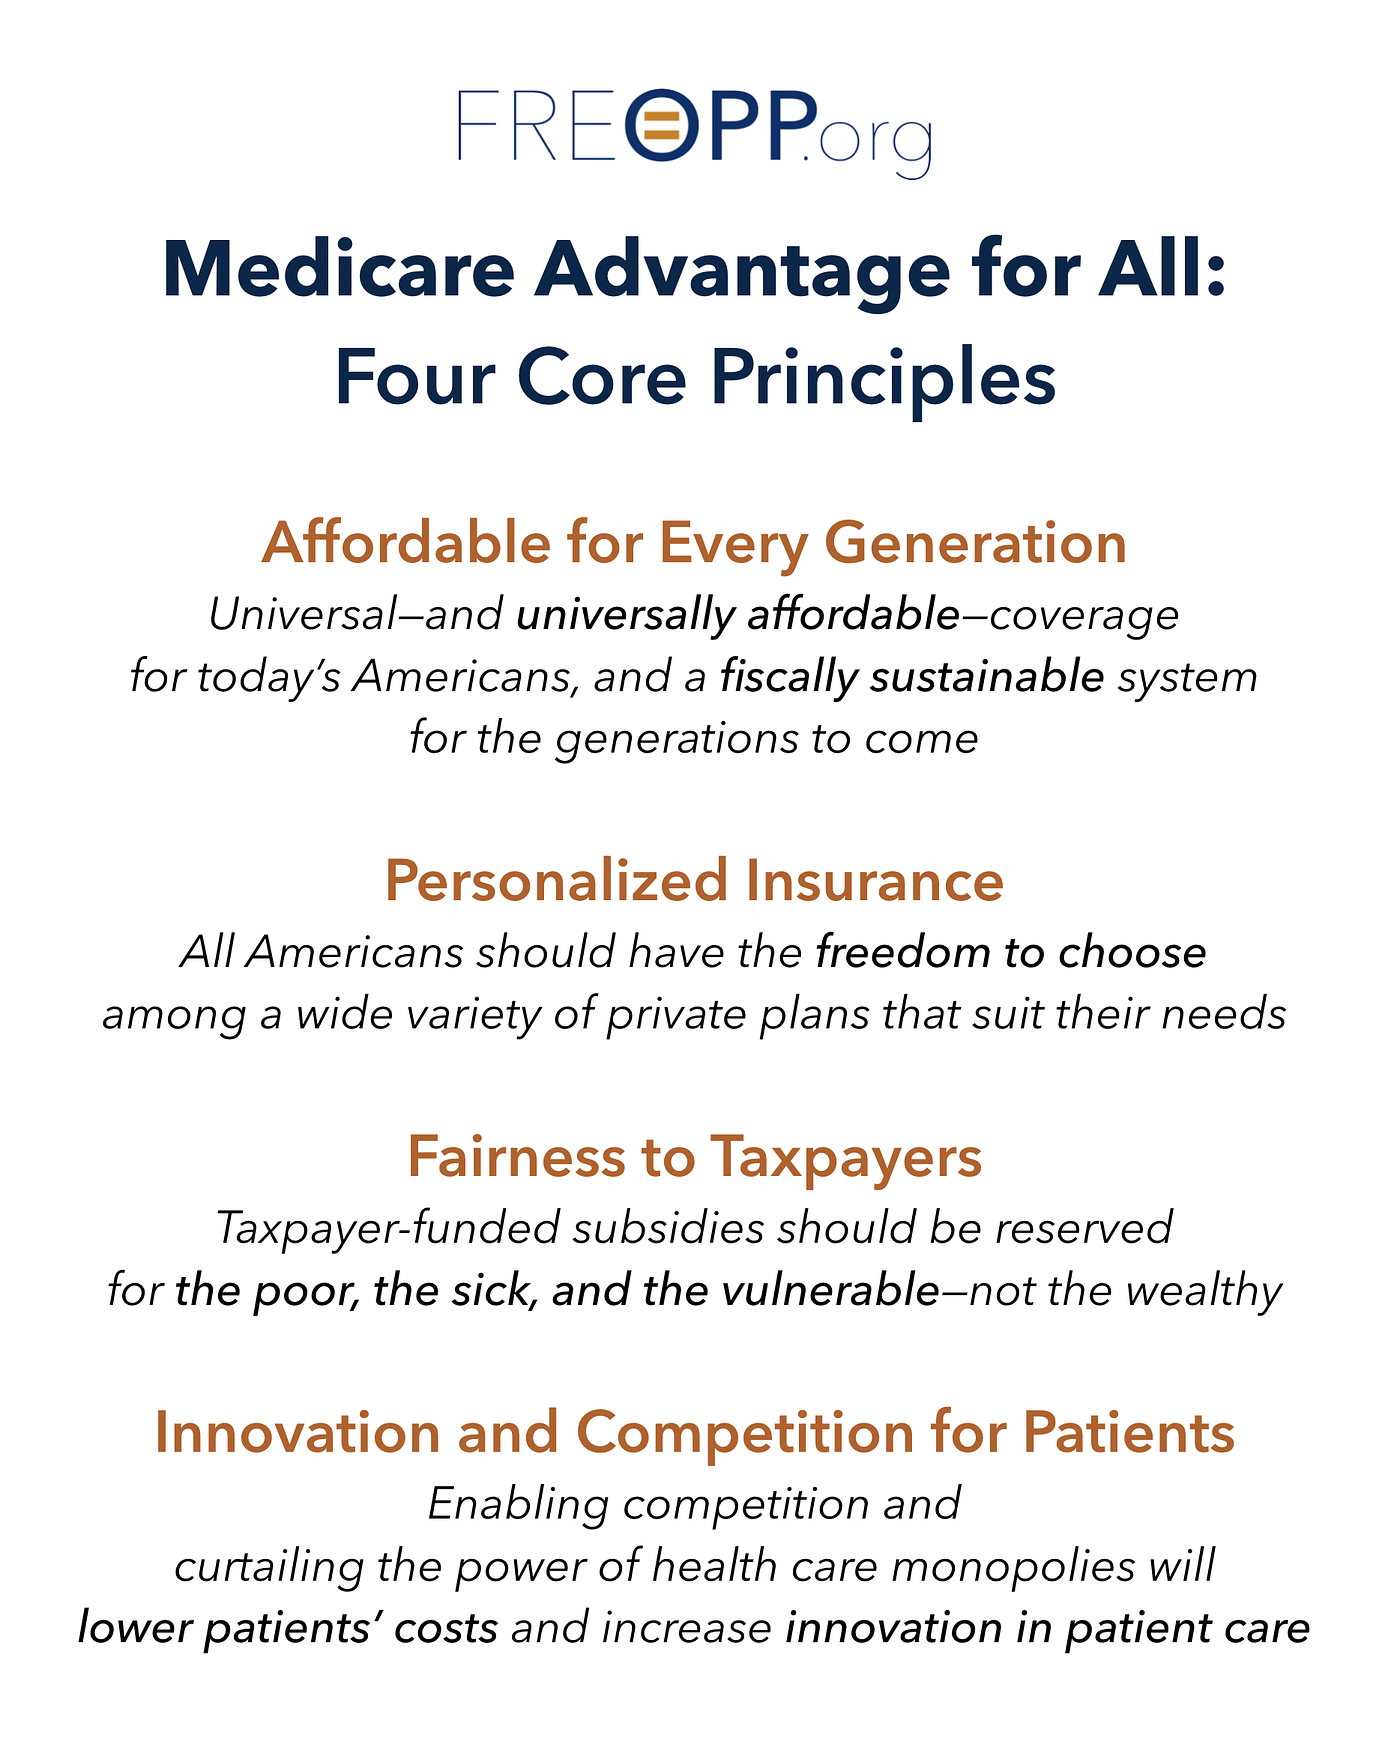 Paul B Insurance Medicare Health Advantage Melville